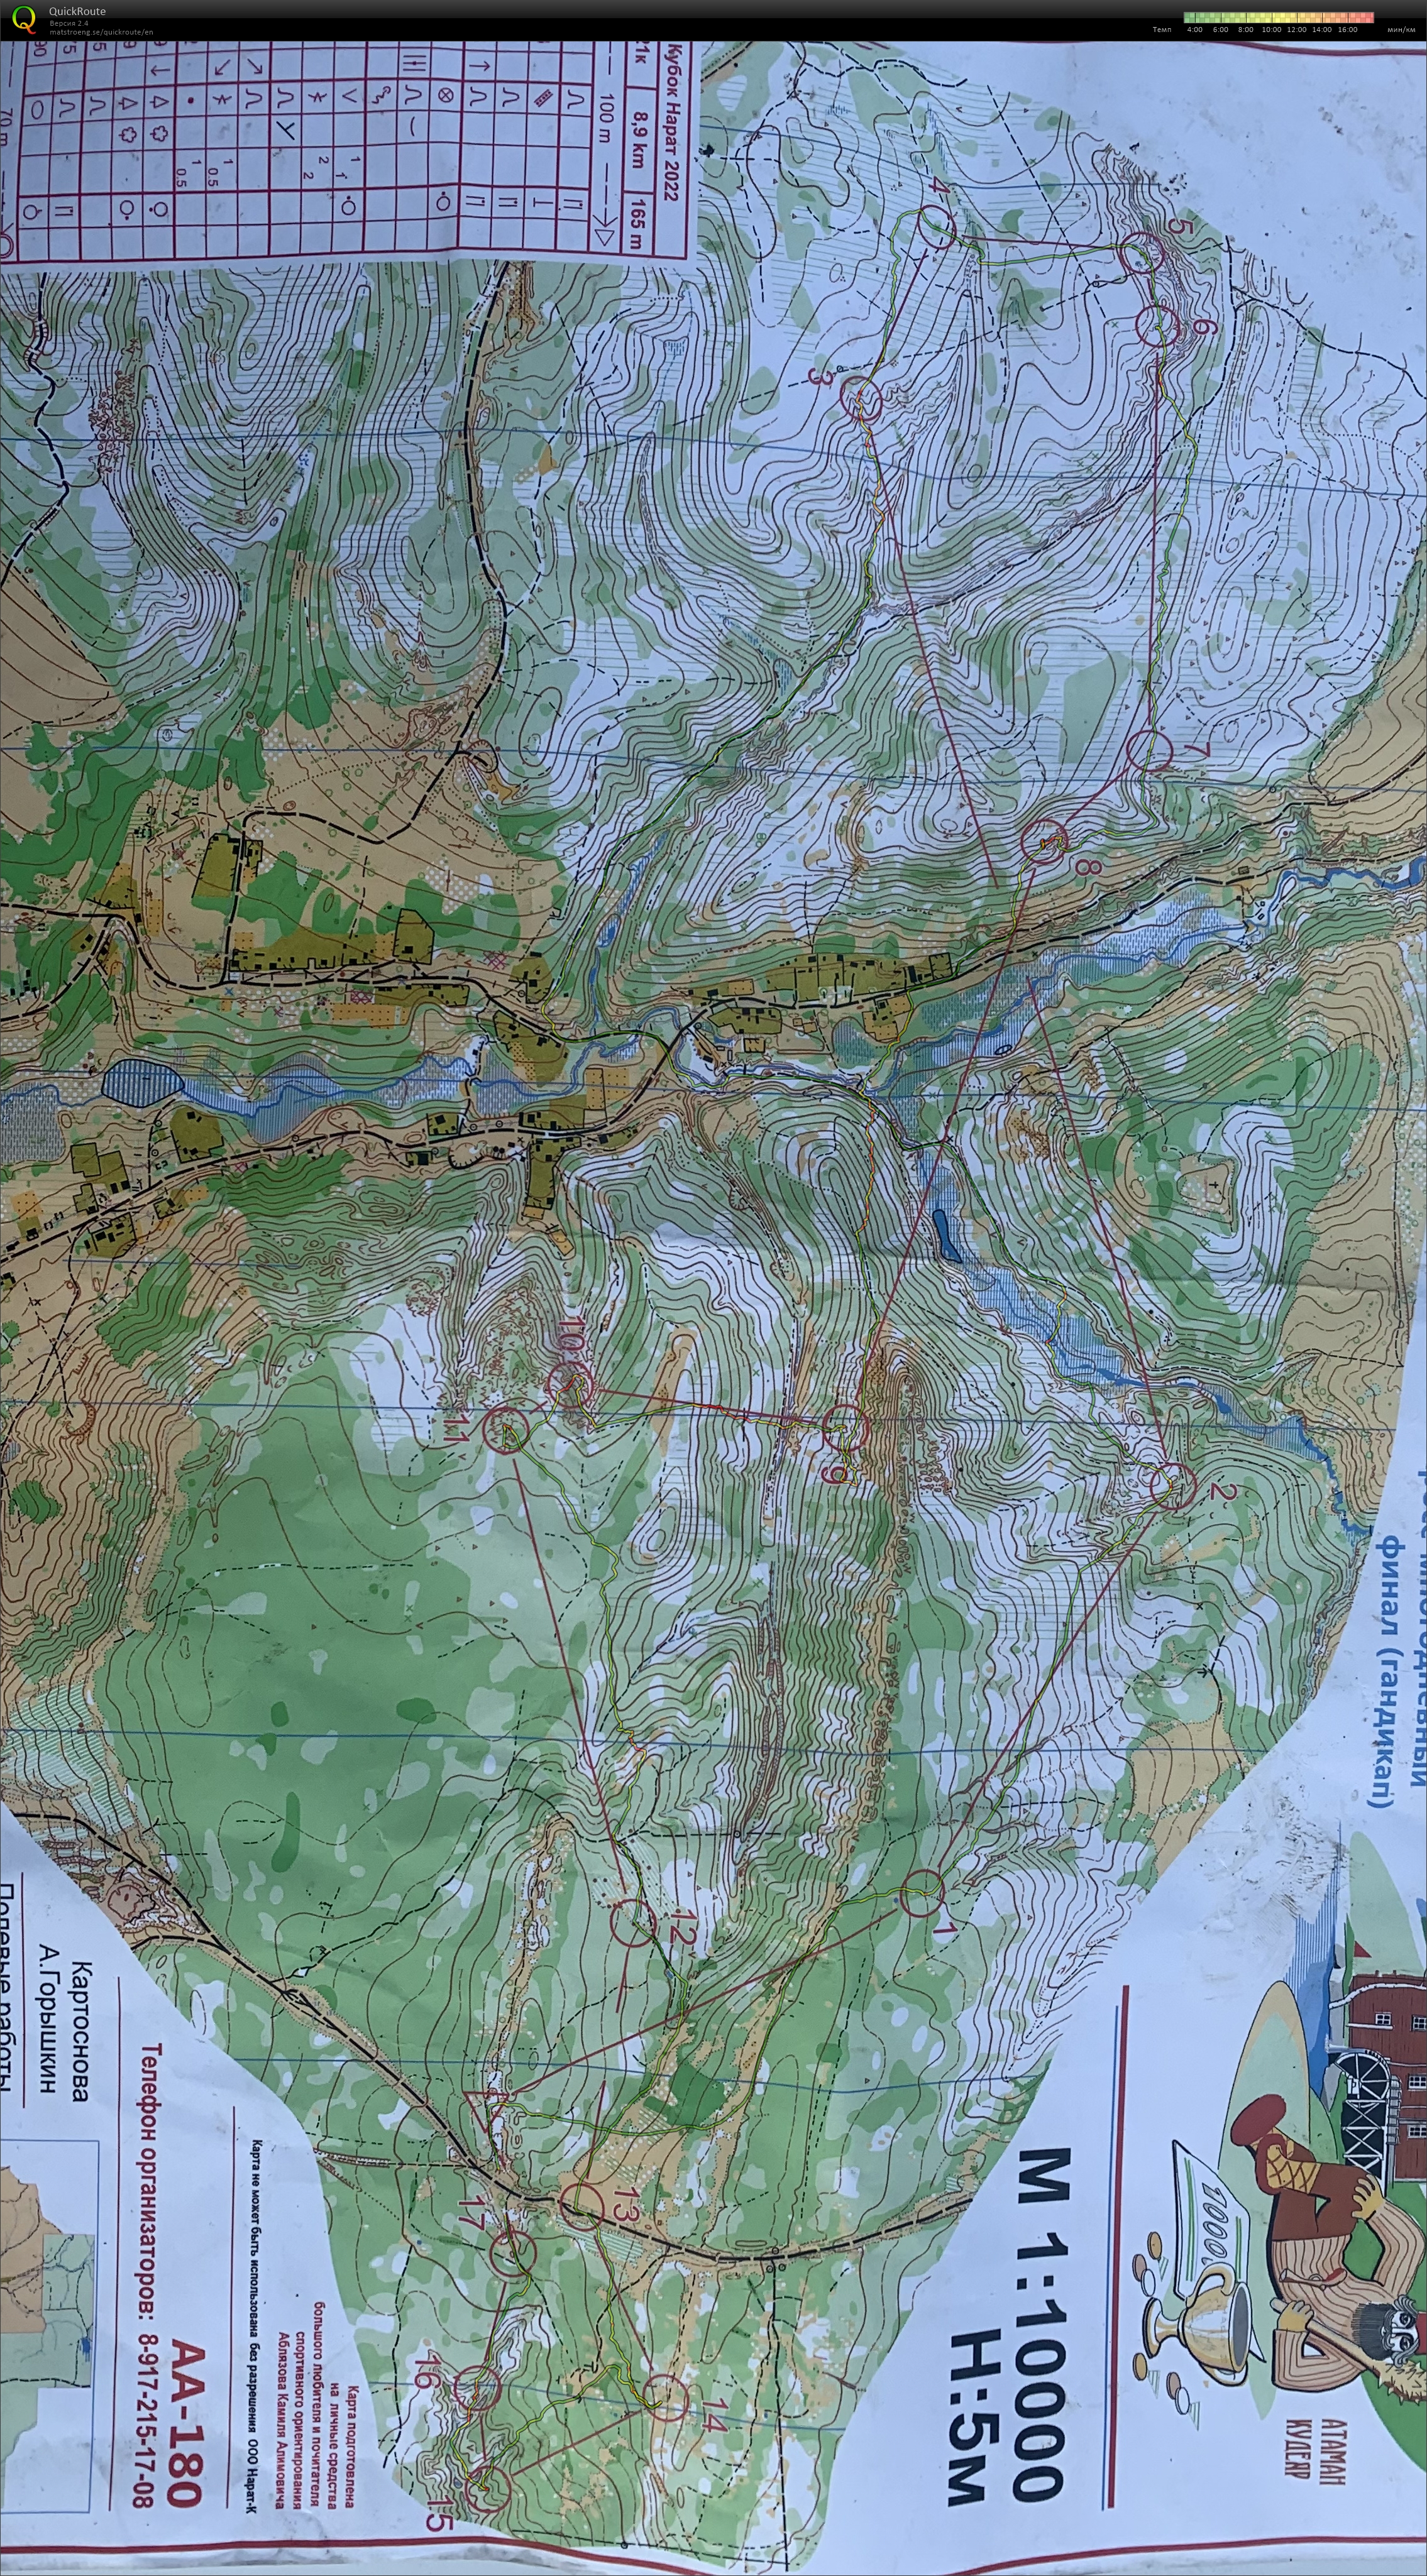 Map with track - Нарат 2022 2 день М-21к, Лонг, area - с. Лох, Саратовская обл., from orienteering map archive of Anton Skalkin